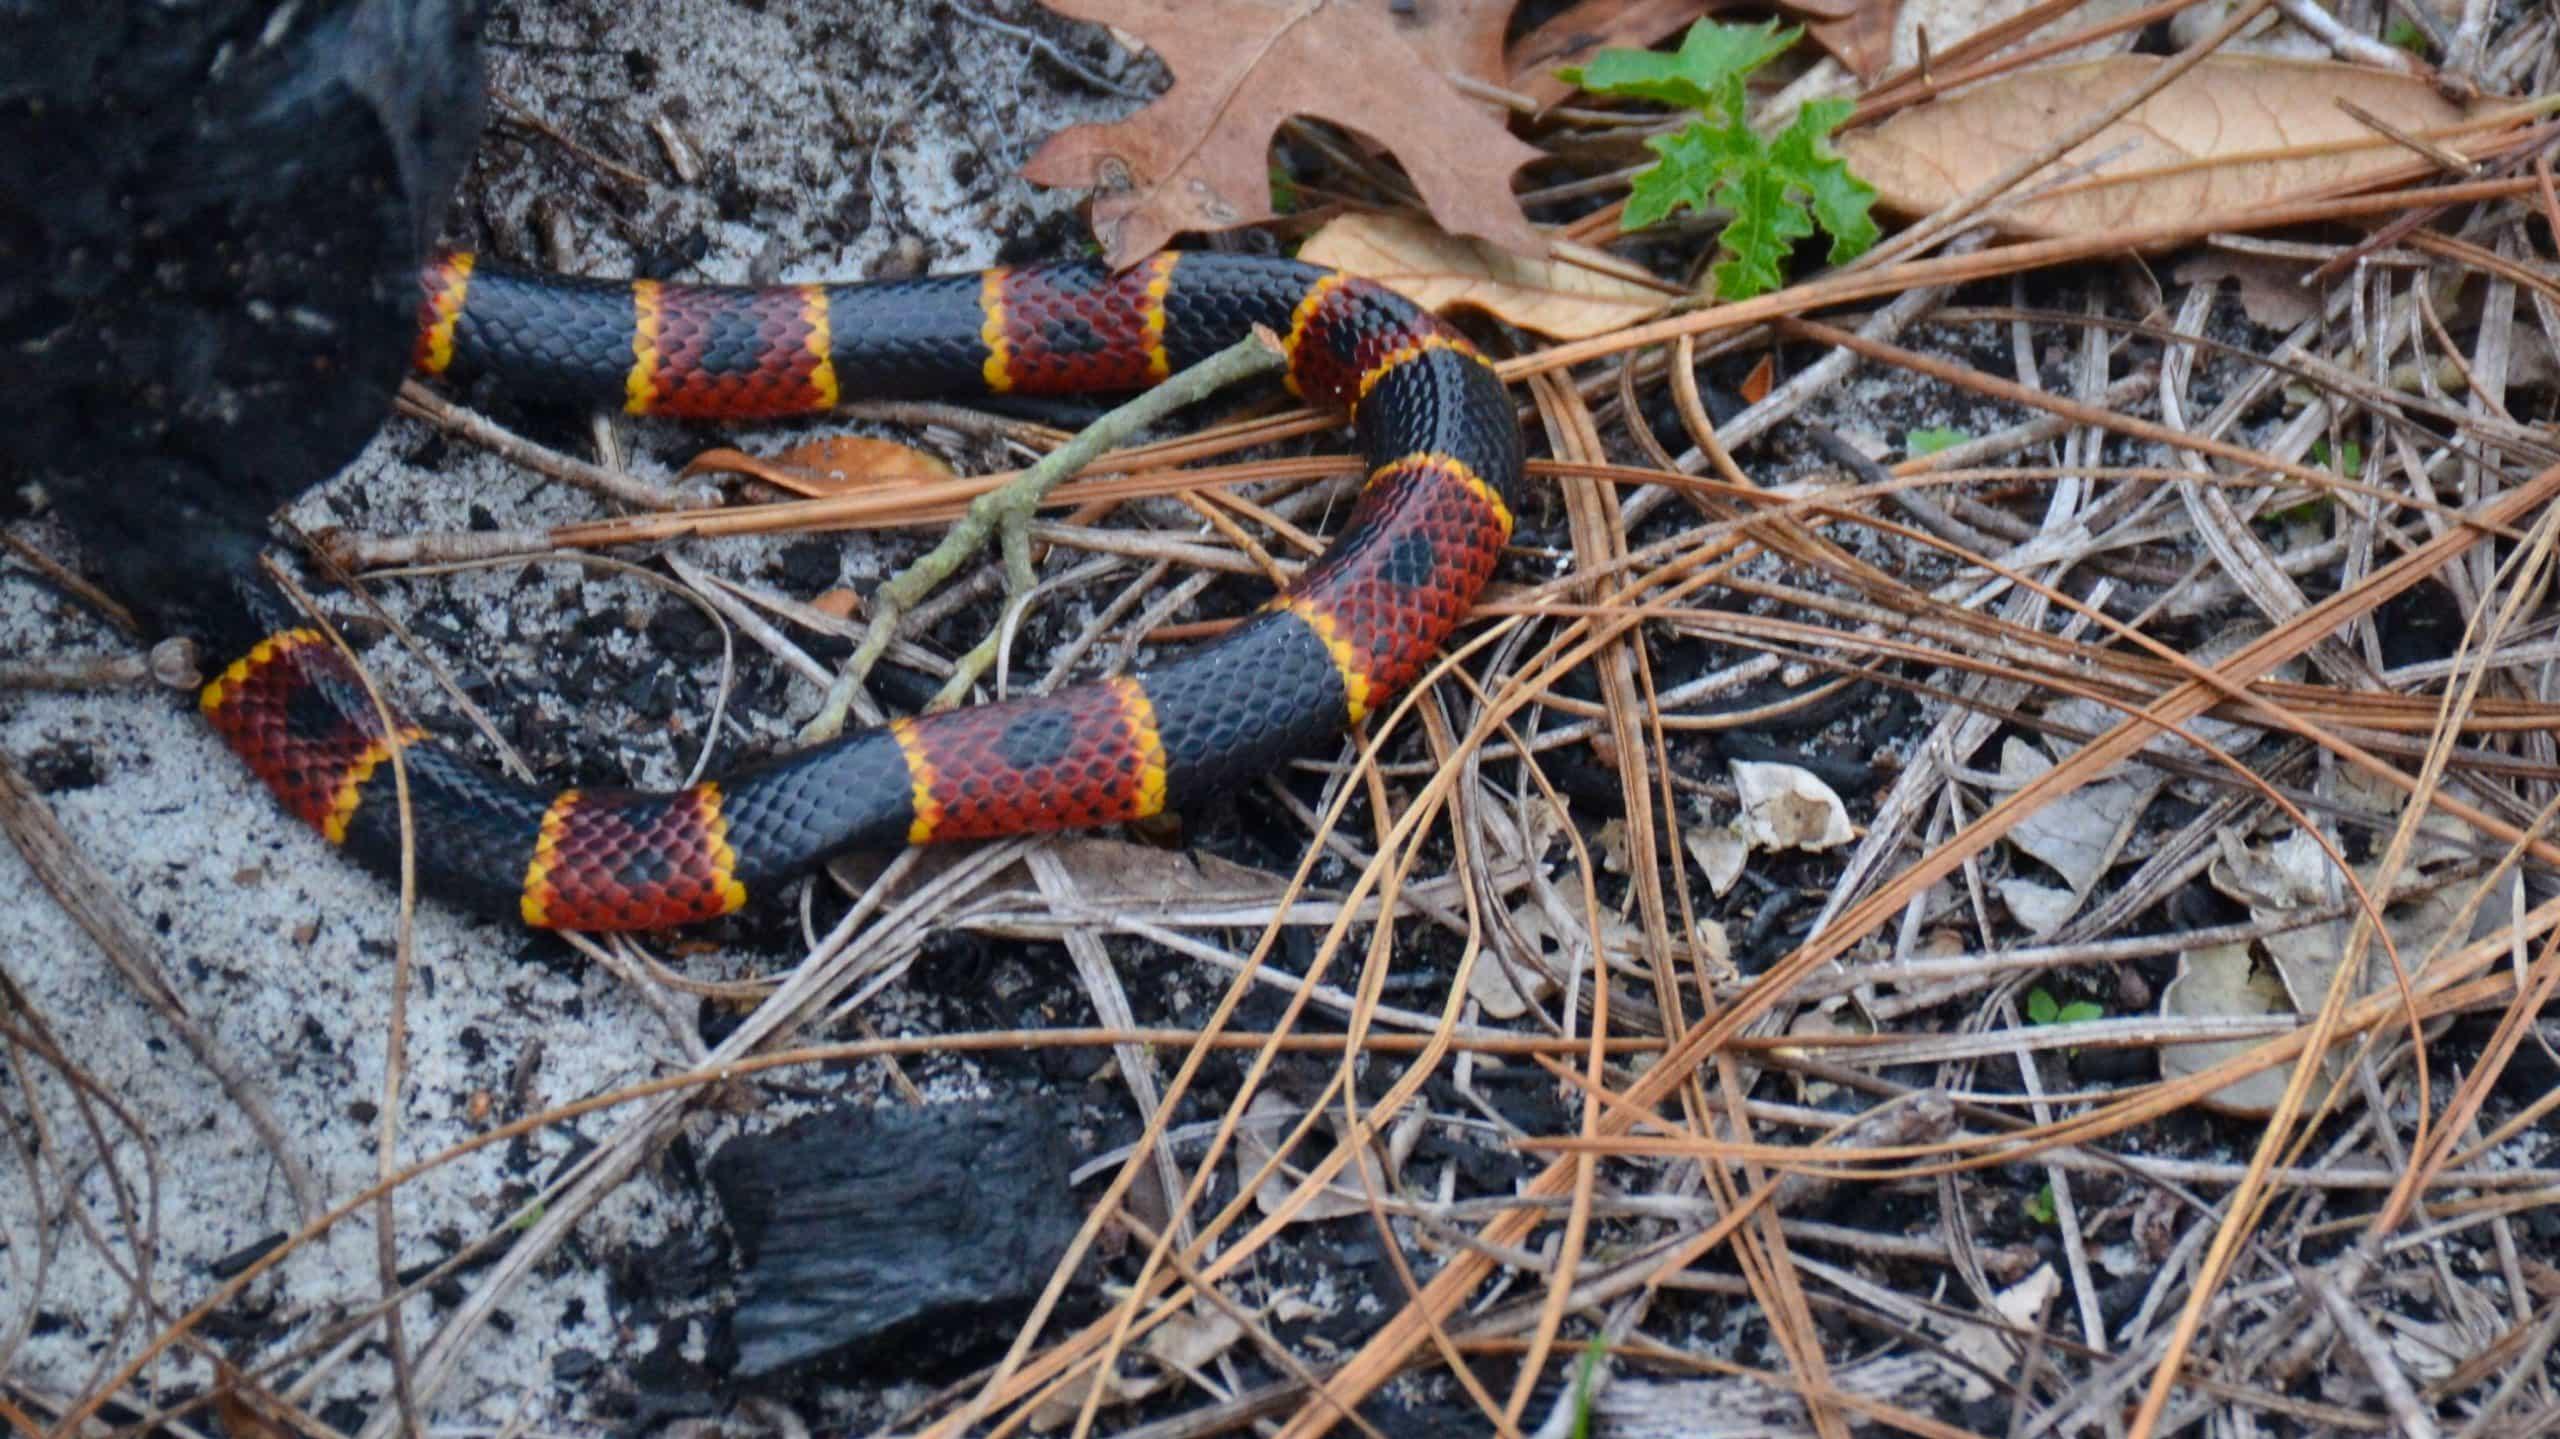 How to identify venomous snakes in Florida Florida Hikes